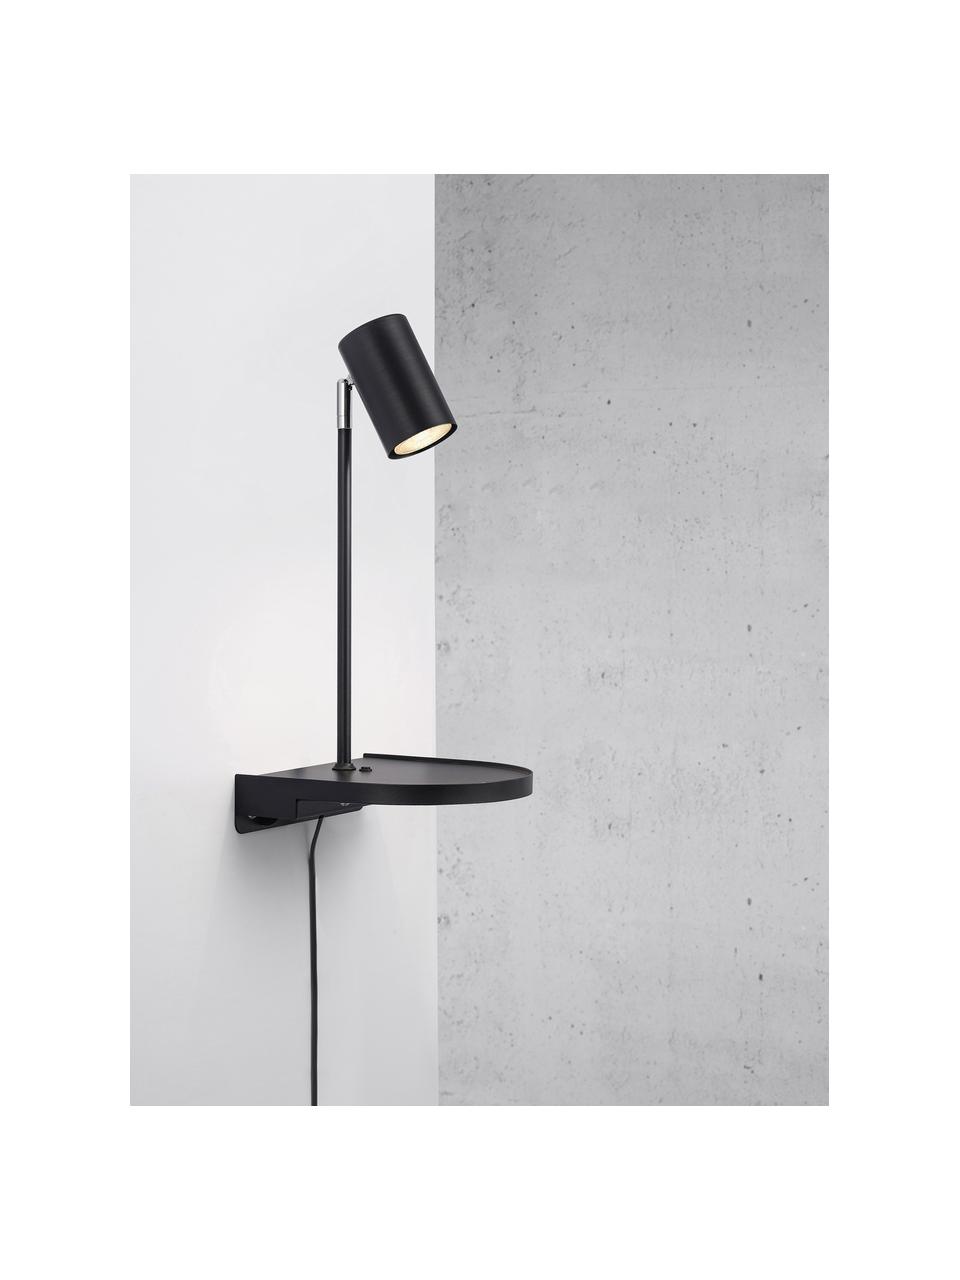 Grote verstelbare wandlamp Colly met stekker en USB aansluiting, Lampenkap: gecoat metaal, Zwart, B 20 x H 43 cm